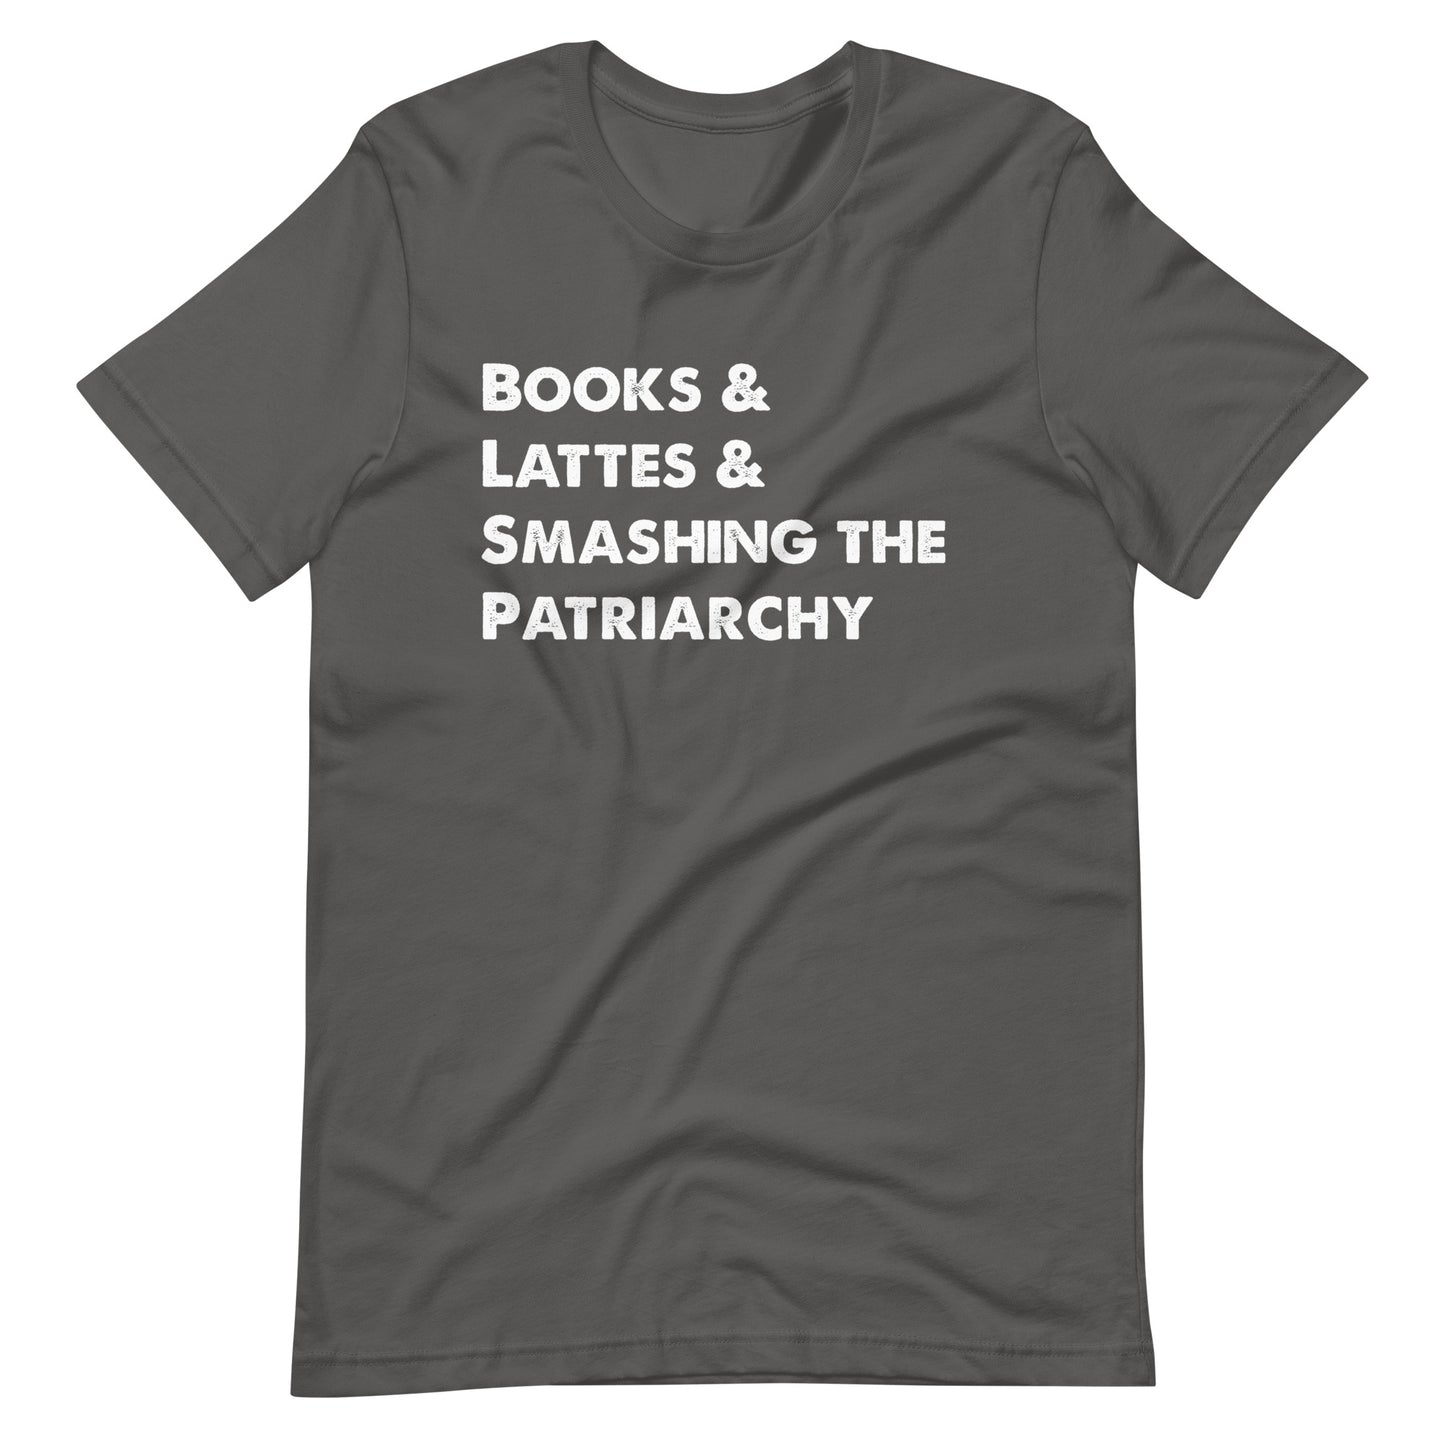 Smashing the Patriarchy t-shirt